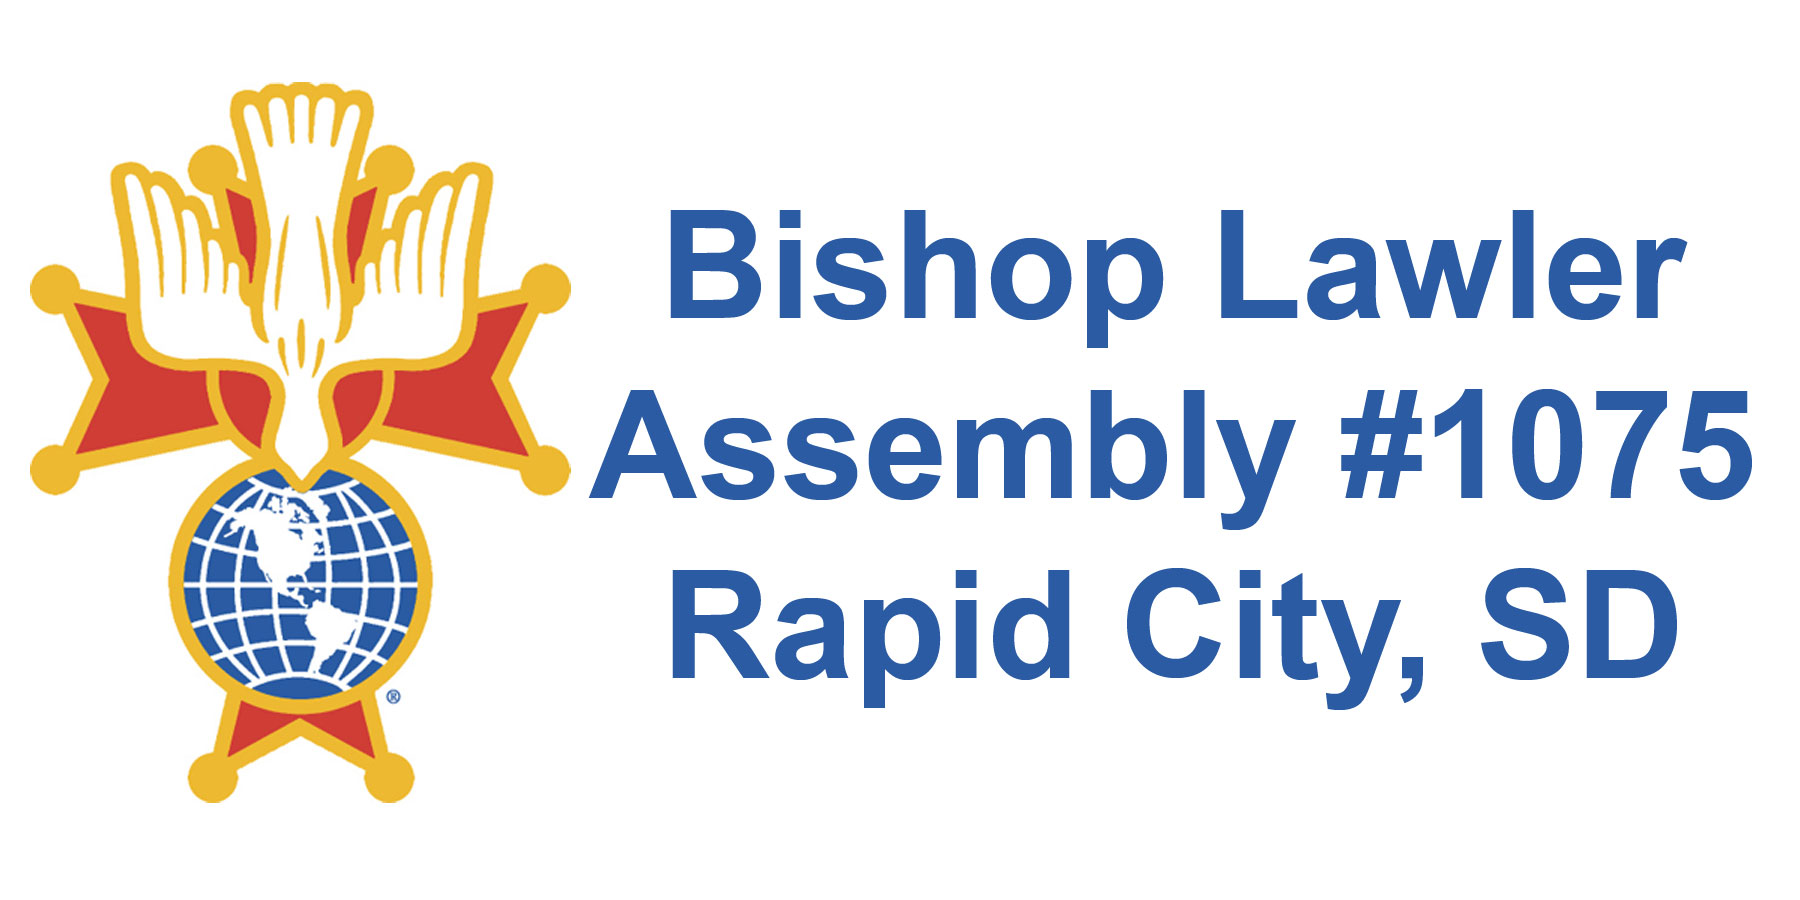 Bishop Lawler Assembly 1075